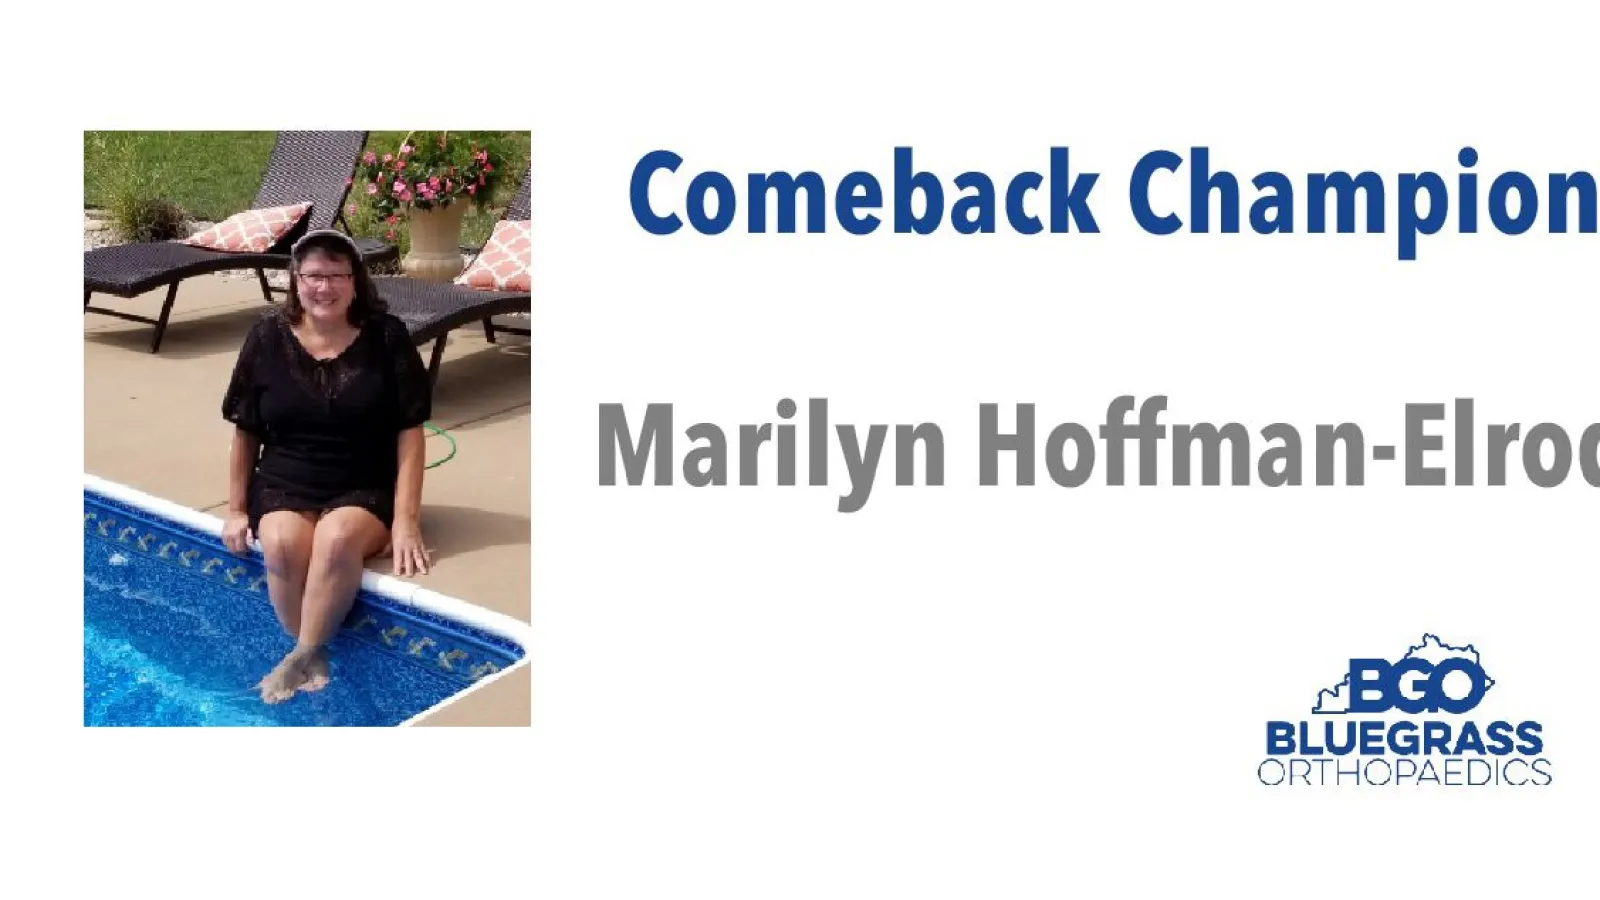  															Marilyn Hoffman-Elrod:  Comeback Champion														